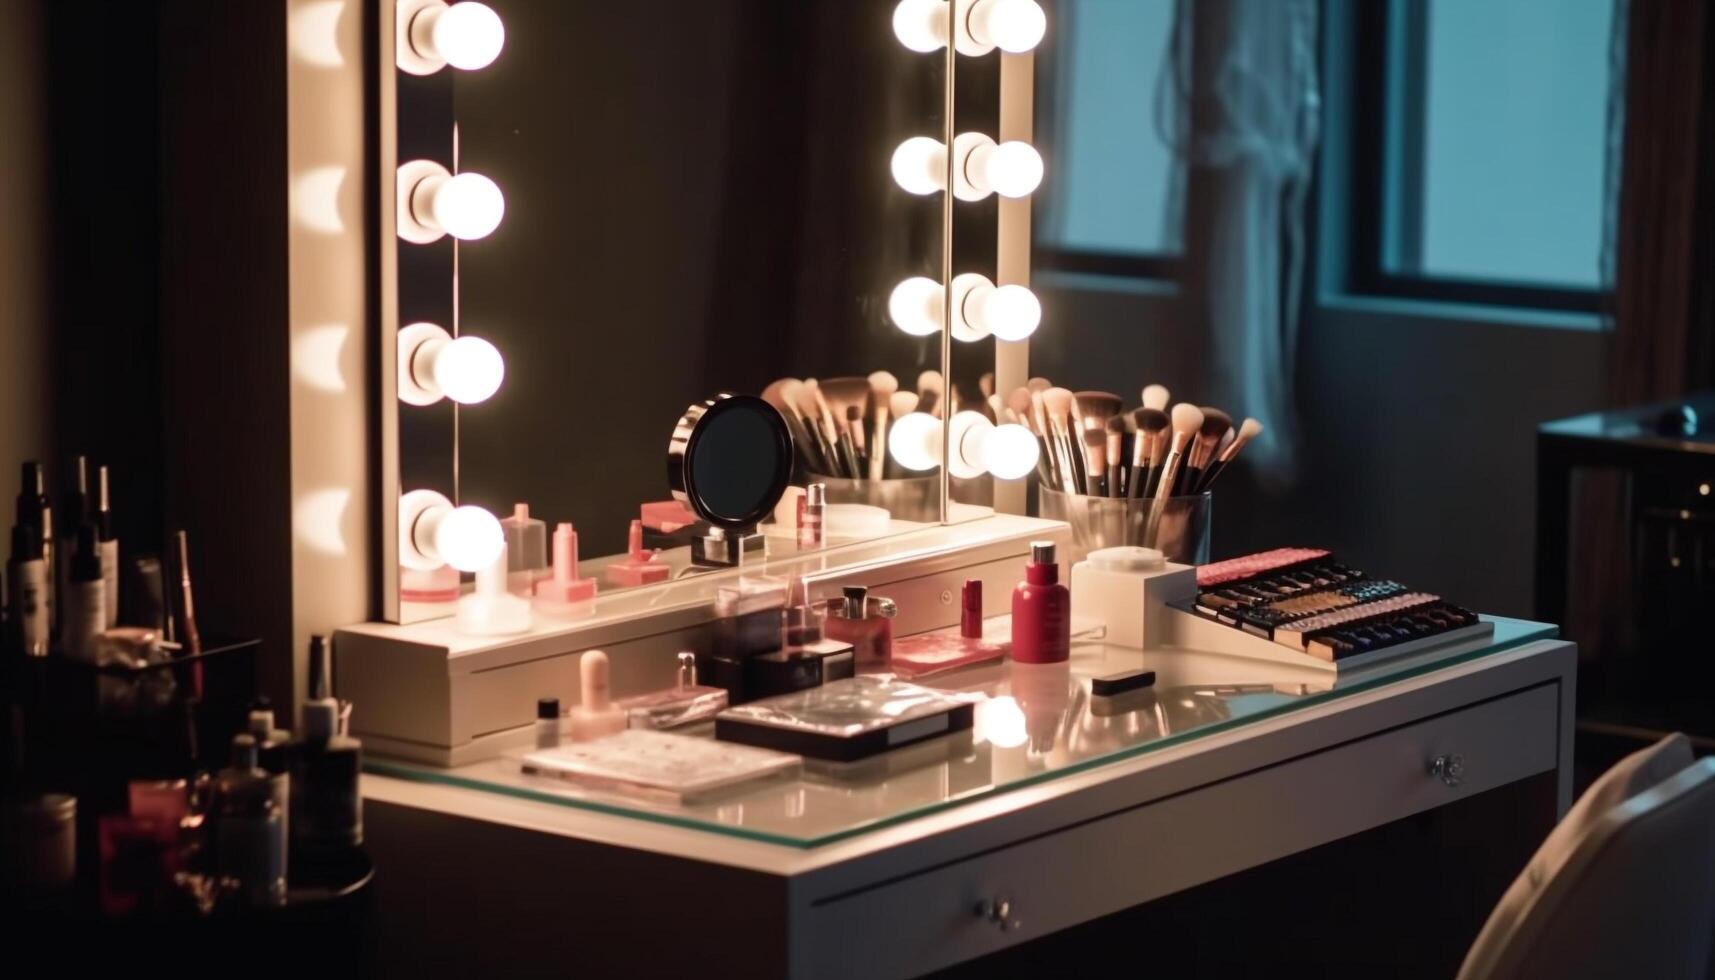 Modern beauty equipment illuminates domestic bathroom for glamorous make up preparation generated by AI photo